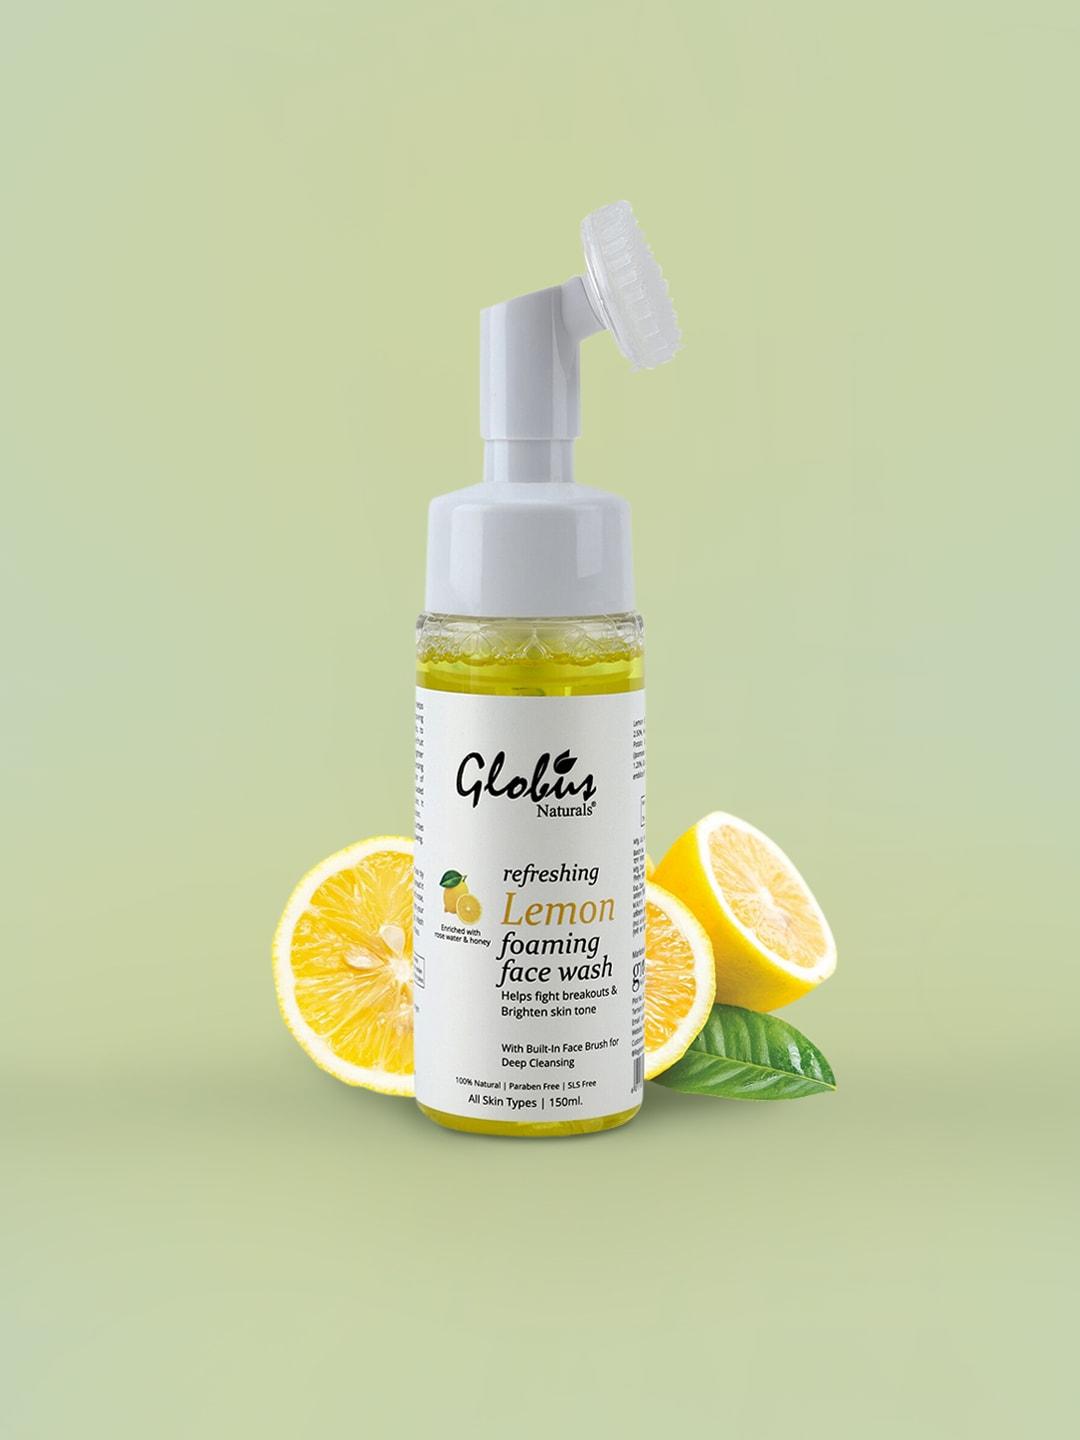 globus-naturals-refreshing-lemon-foaming-face-wash-with-silicon-face-massage-brush-150-ml